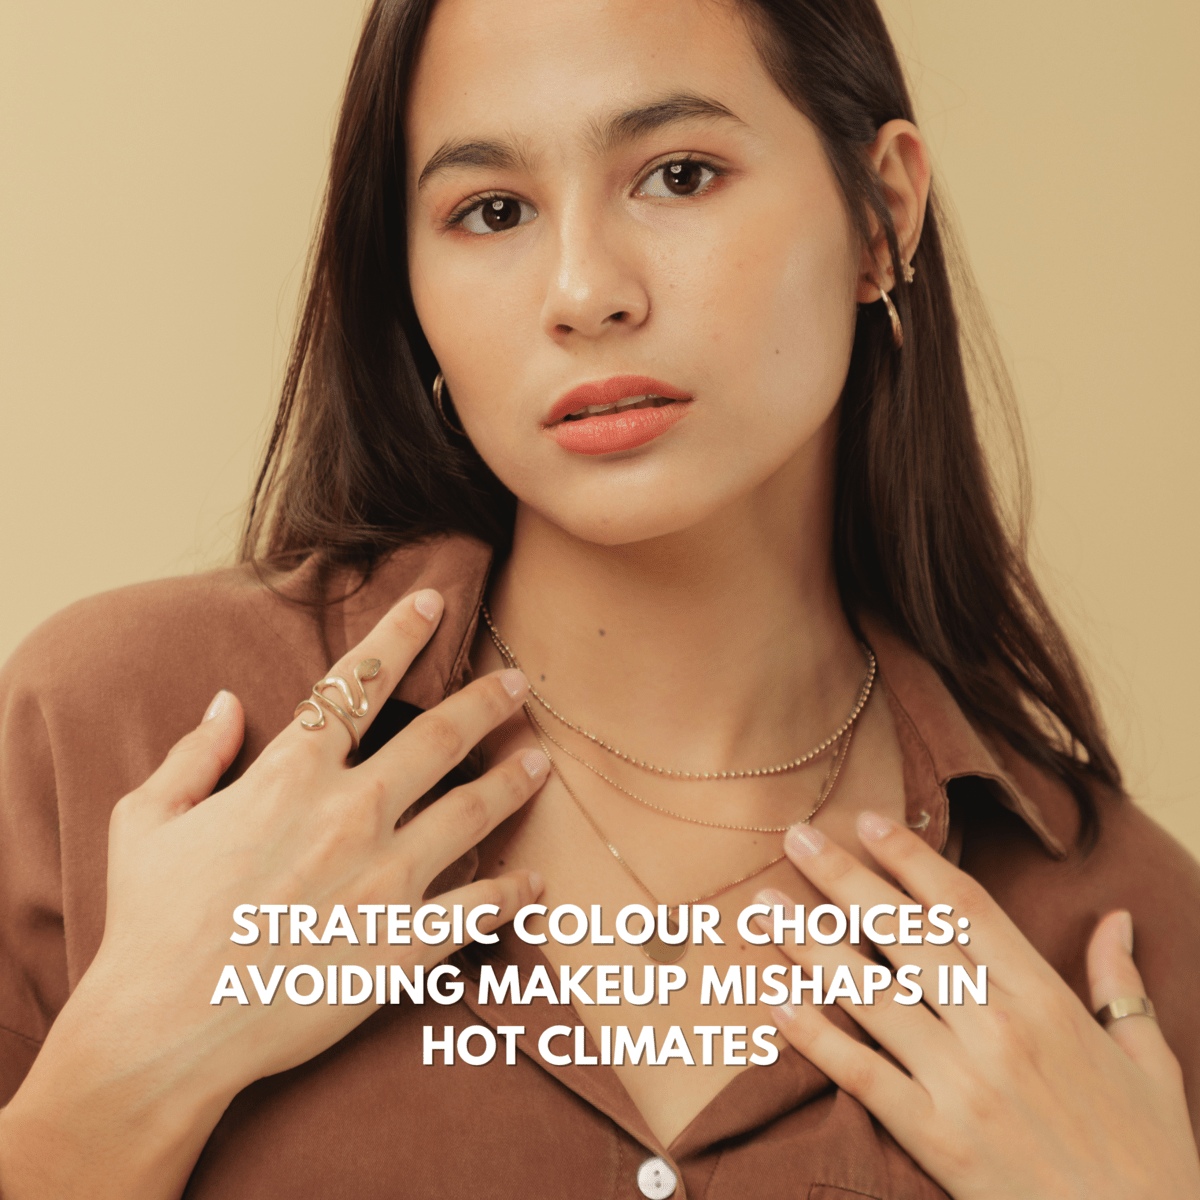 Strategic Colour Choices: Avoiding Makeup Mishaps in Hot Climates